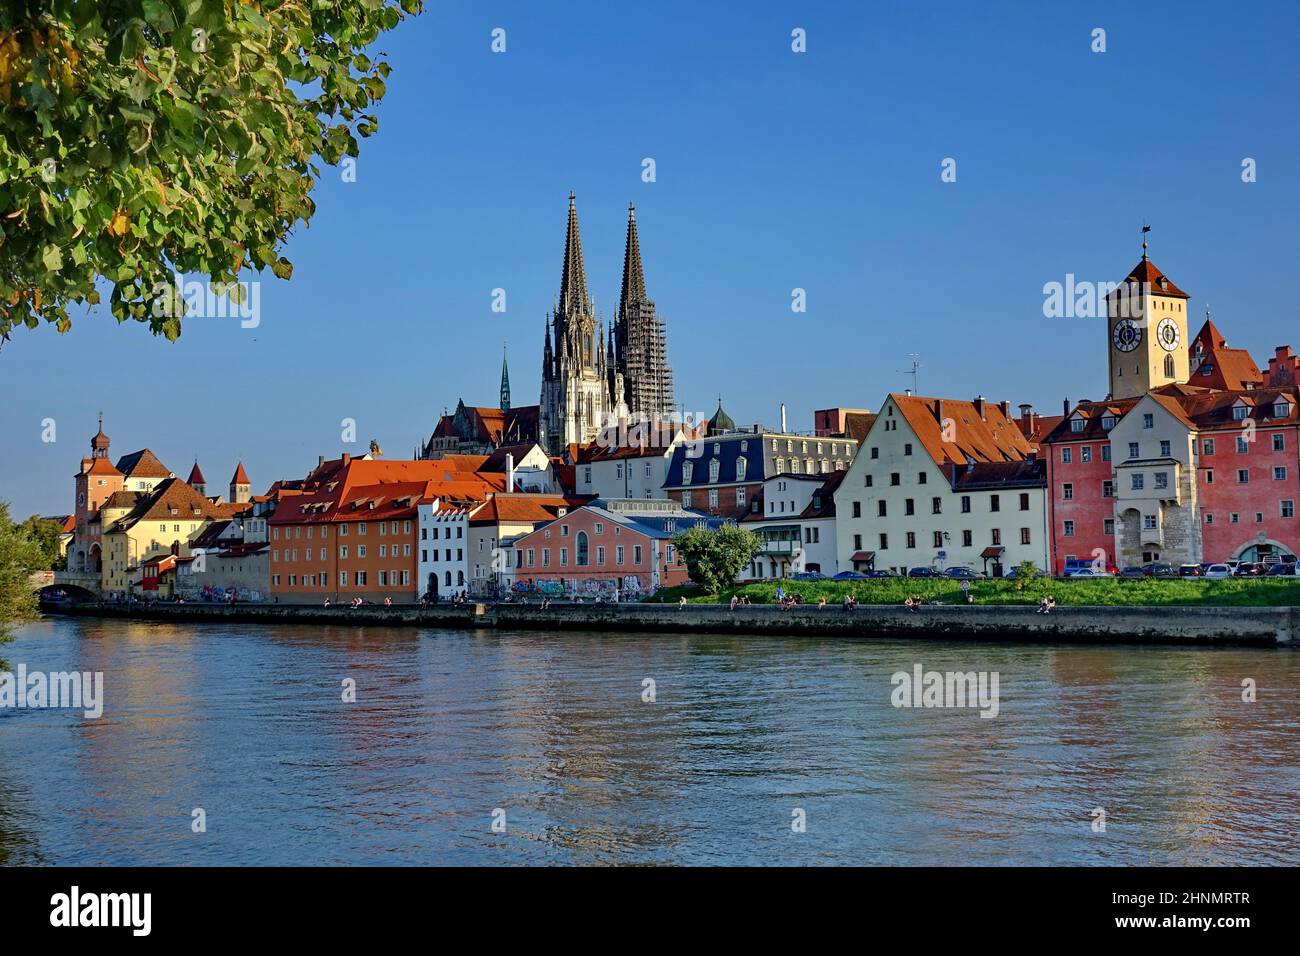 Germany, Bavaria, Regensburg, Oberpfalz, unesco heritage site, Cathedrale St. Peter, Danube,  toursm, trip Stock Photo